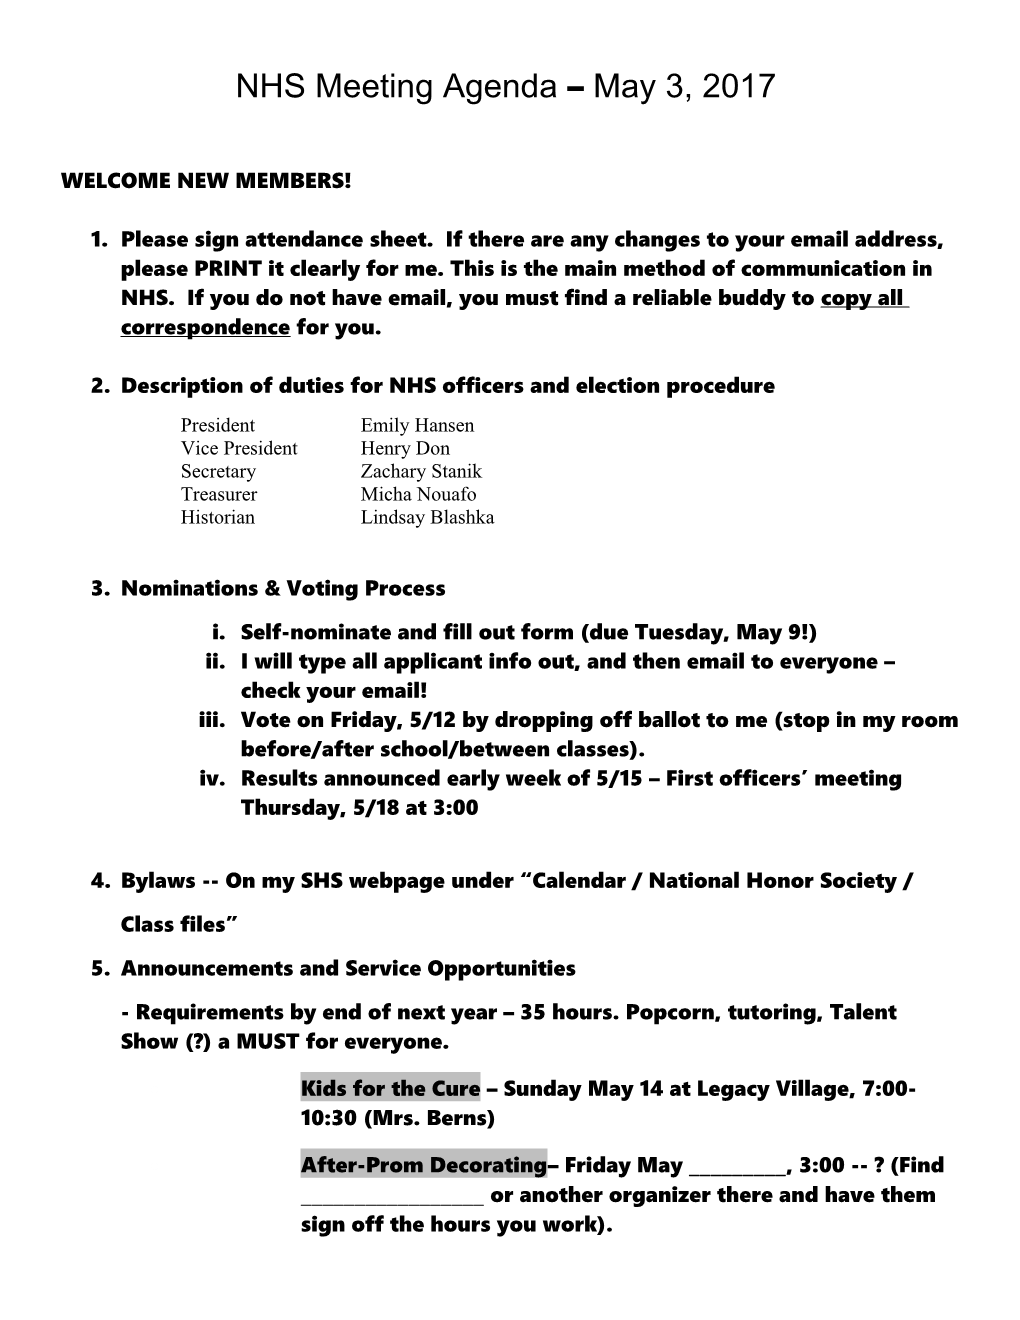 NHS Meeting Agenda - May 20, 2003